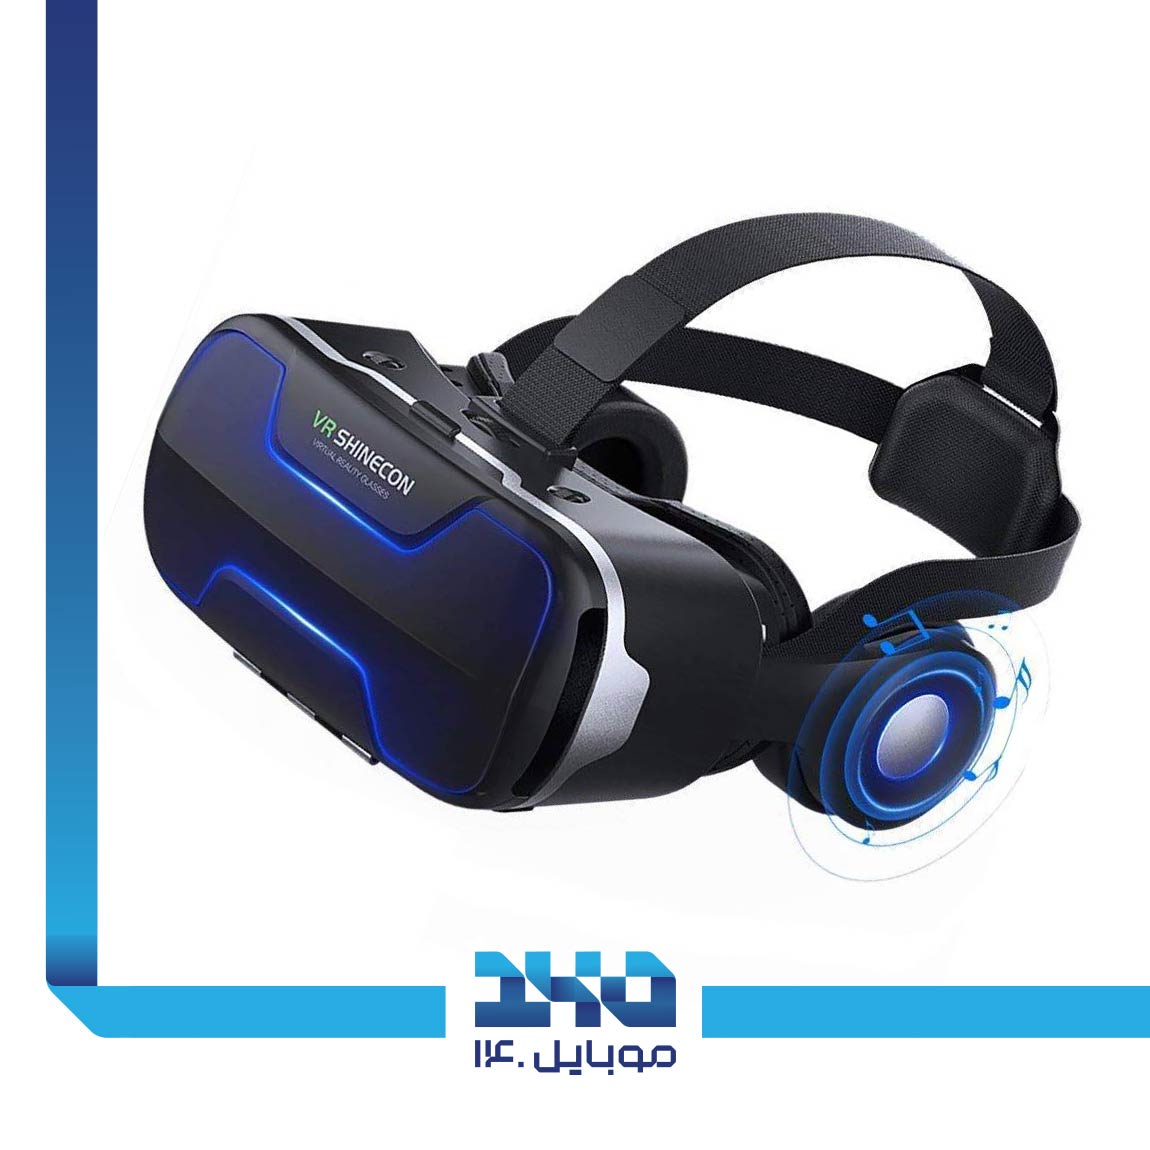 ShineCon SC-G02ED Virtual Reality Headset 3